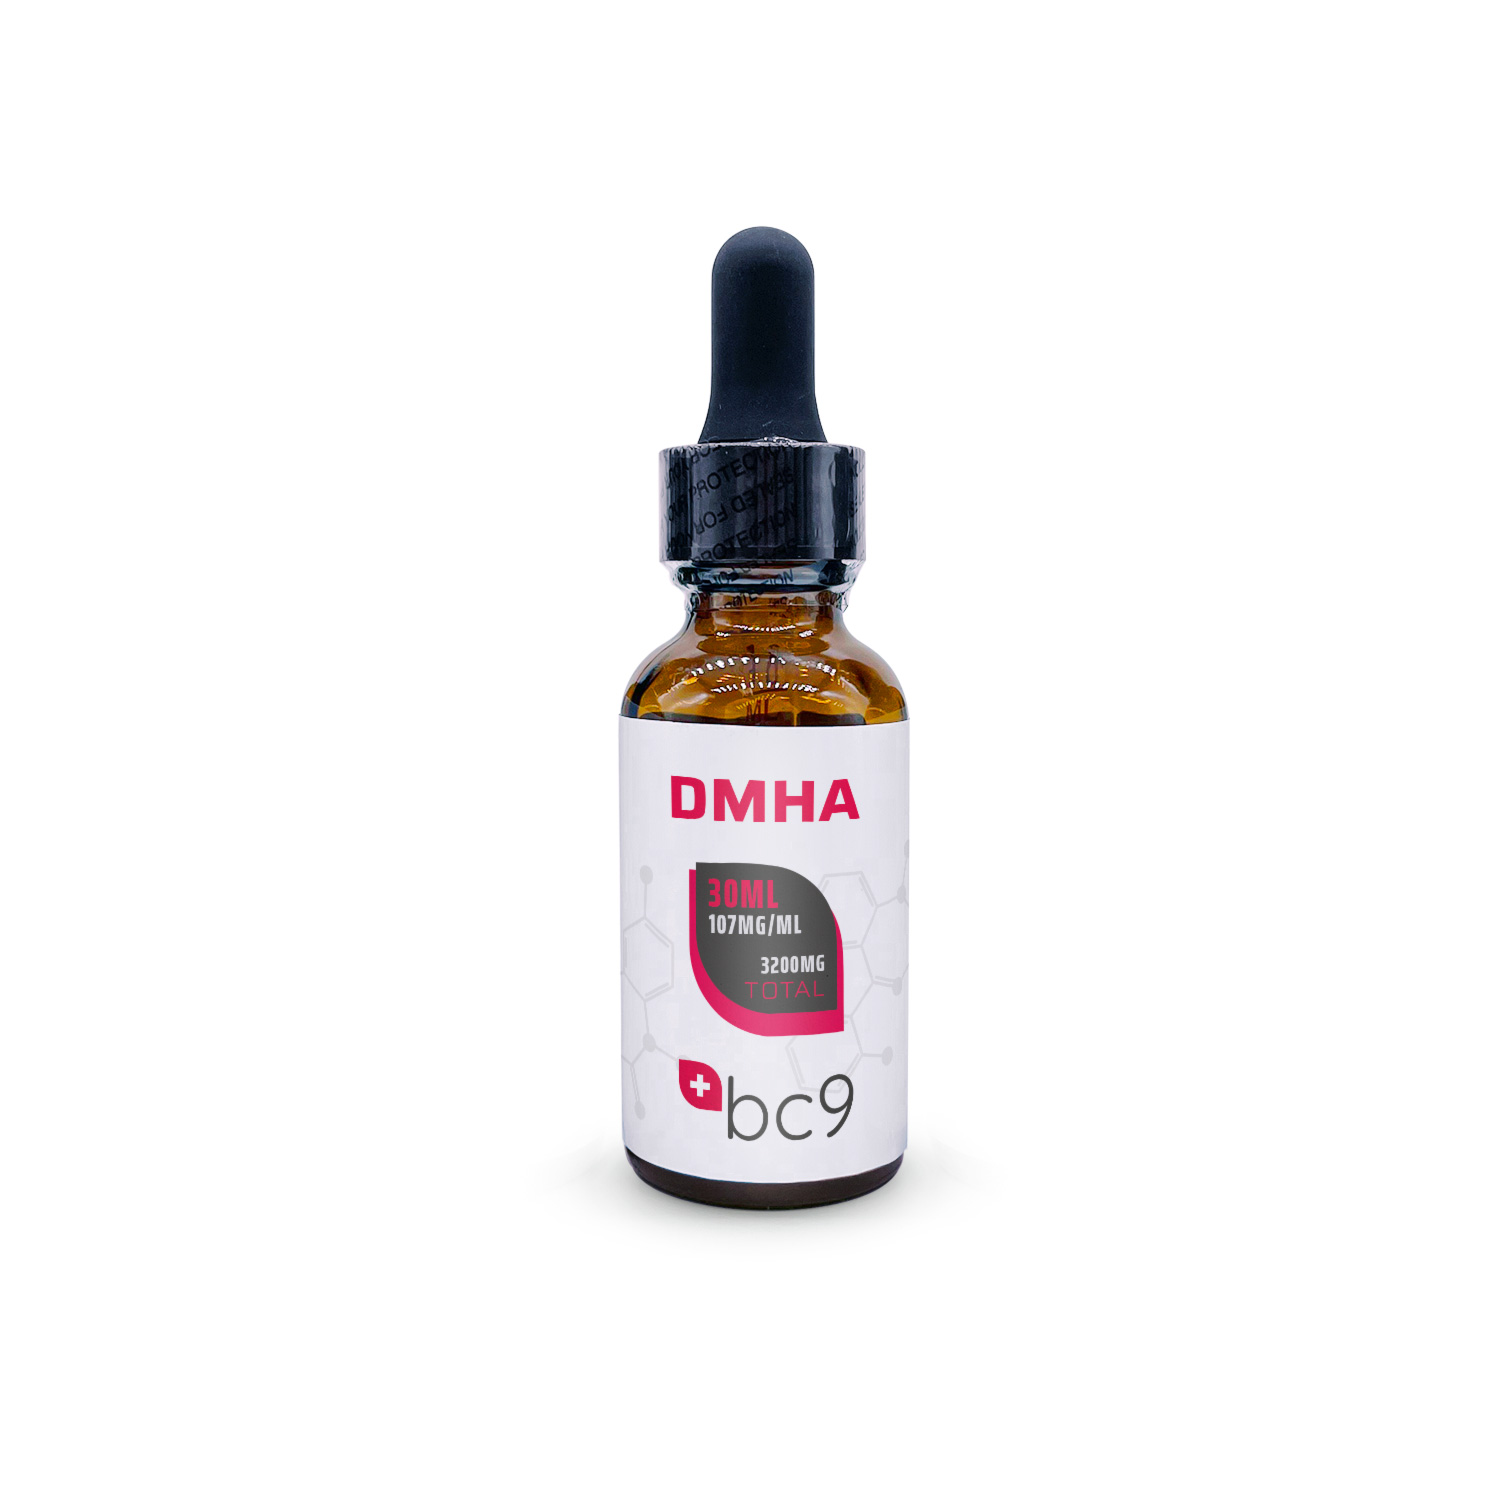 DMHA Liquid For Sale | Fast Shipping | BC9.org